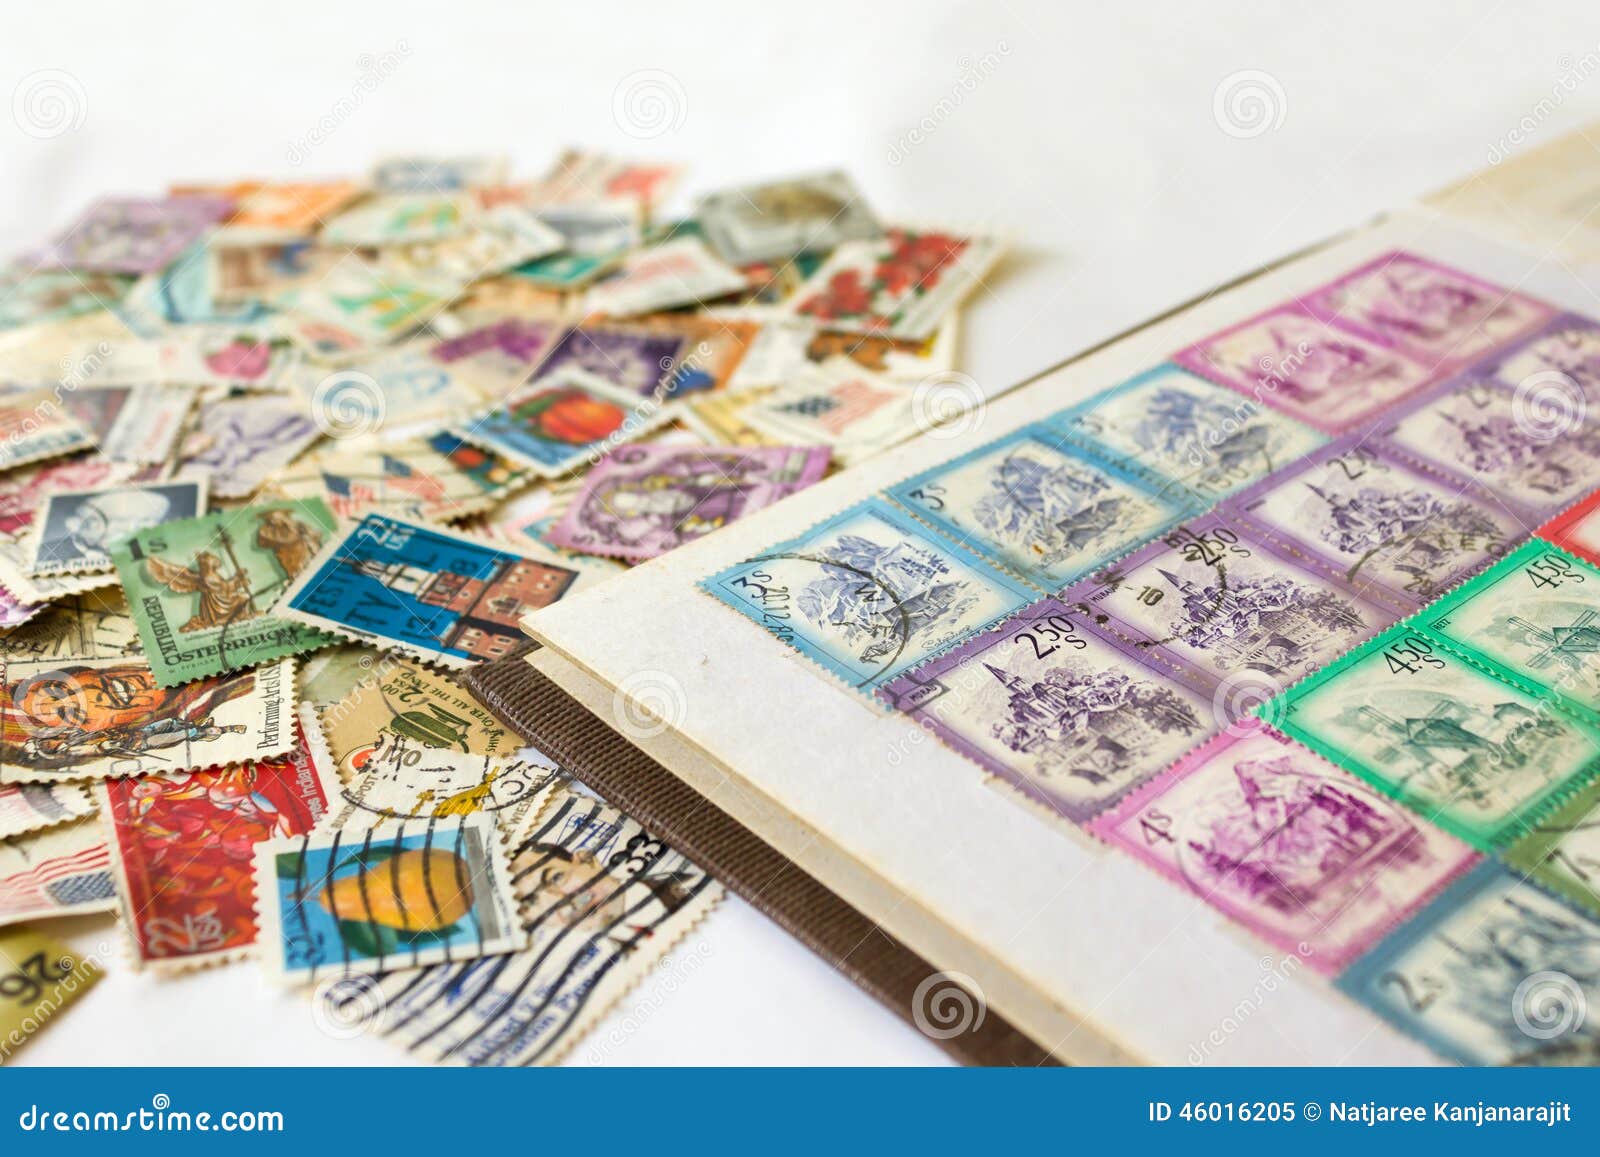 Old Album With Stamps Stock Image | CartoonDealer.com #14136175